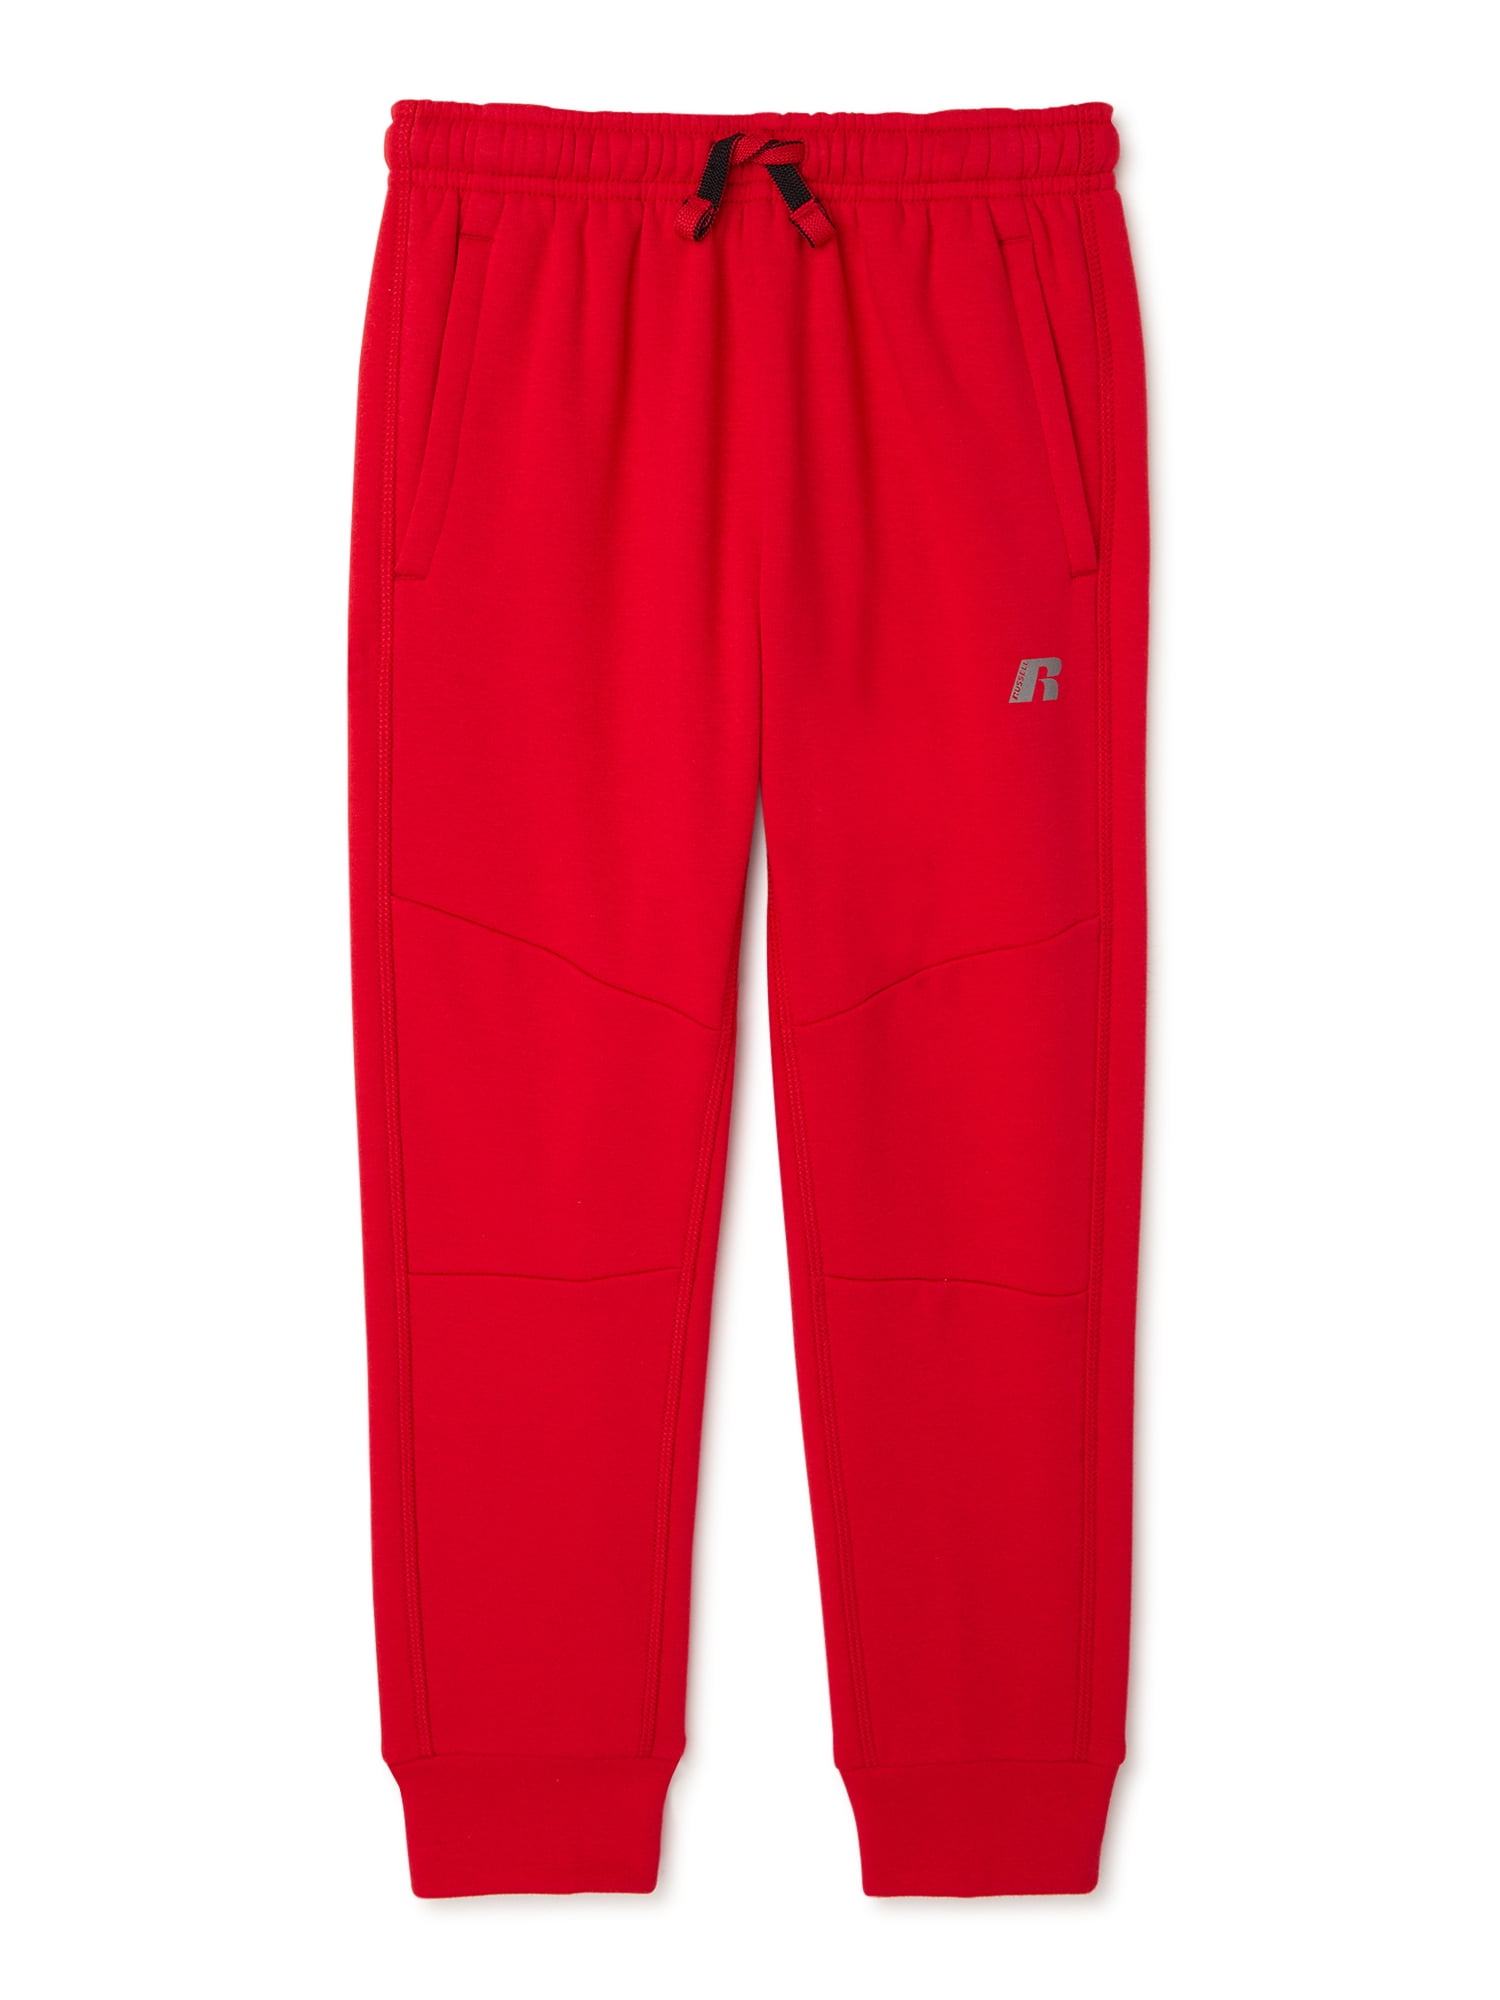 Russell Boys Athletic Knit Pants, Sizes 4-18 & Husky - Walmart.com